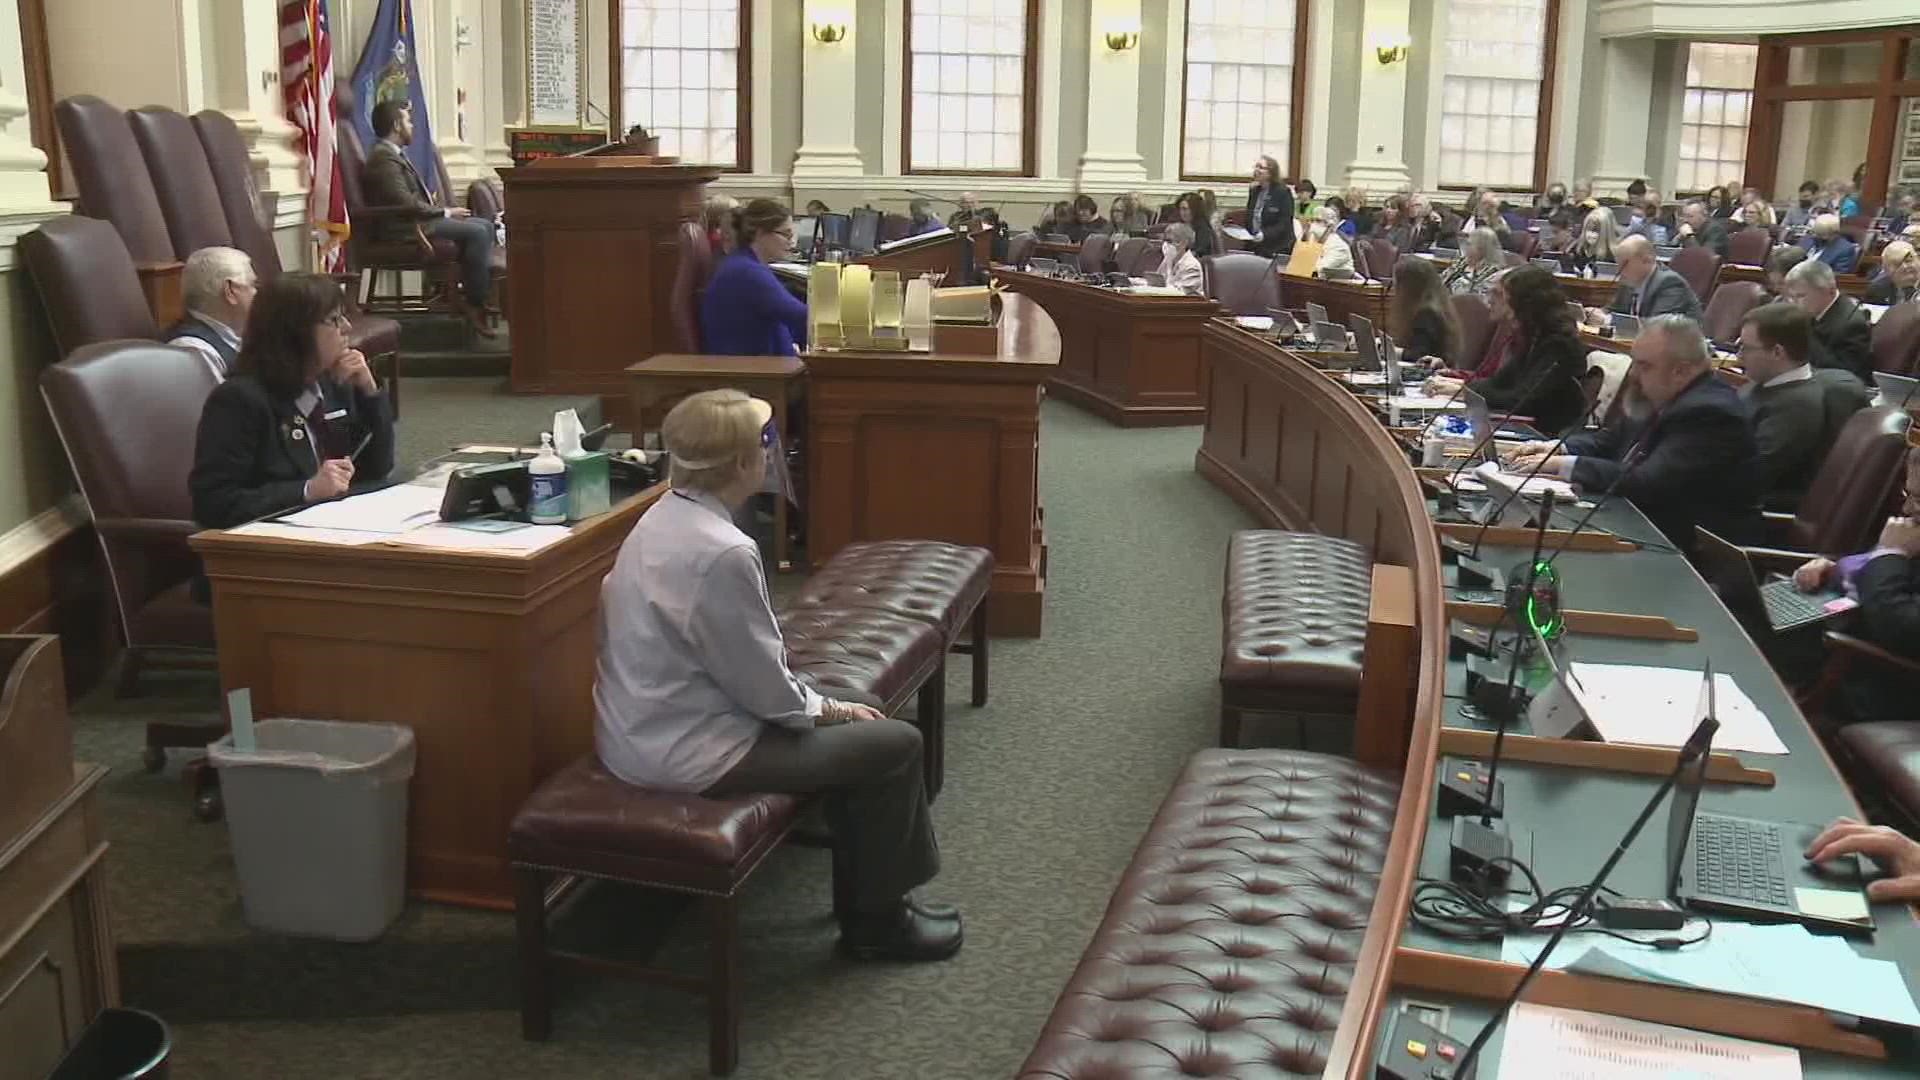 The Maine Legislative session ends Monday, but several bills await decision.